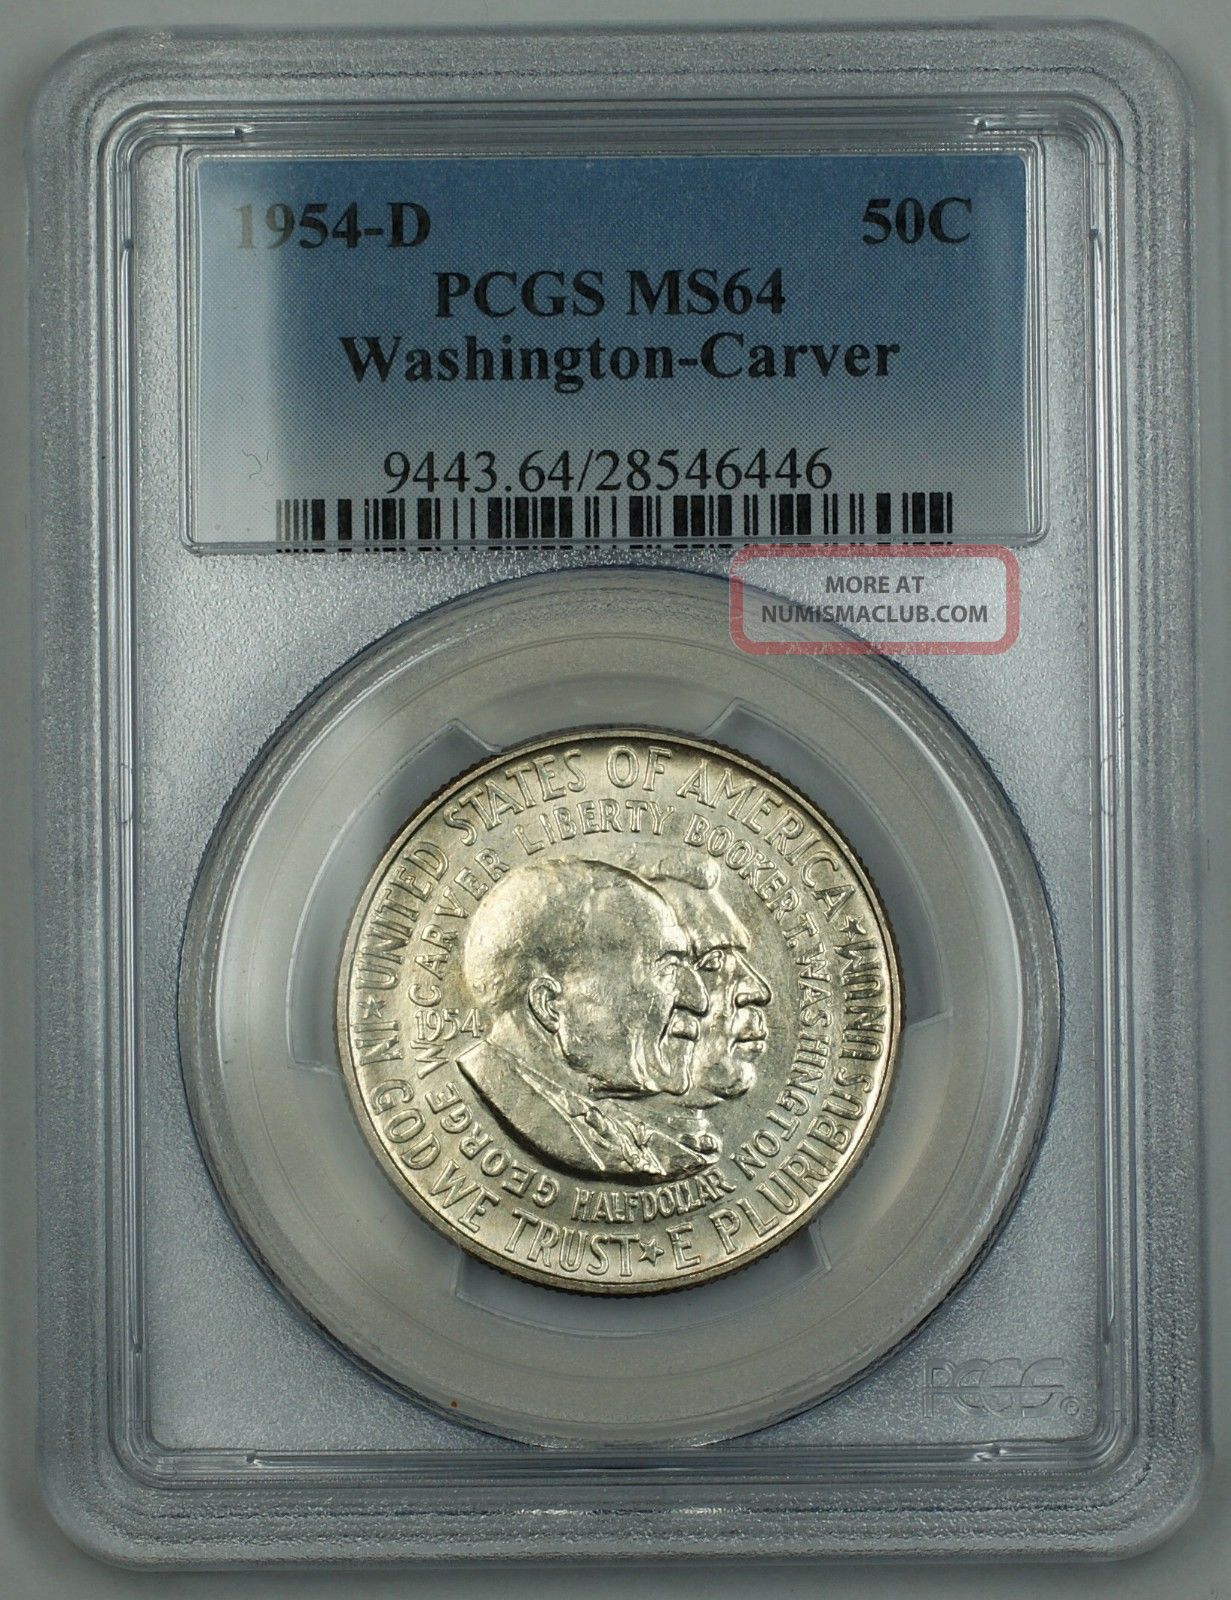 1954 - D Washington - Carver Silver Half Dollar 50c Commemorative Coin